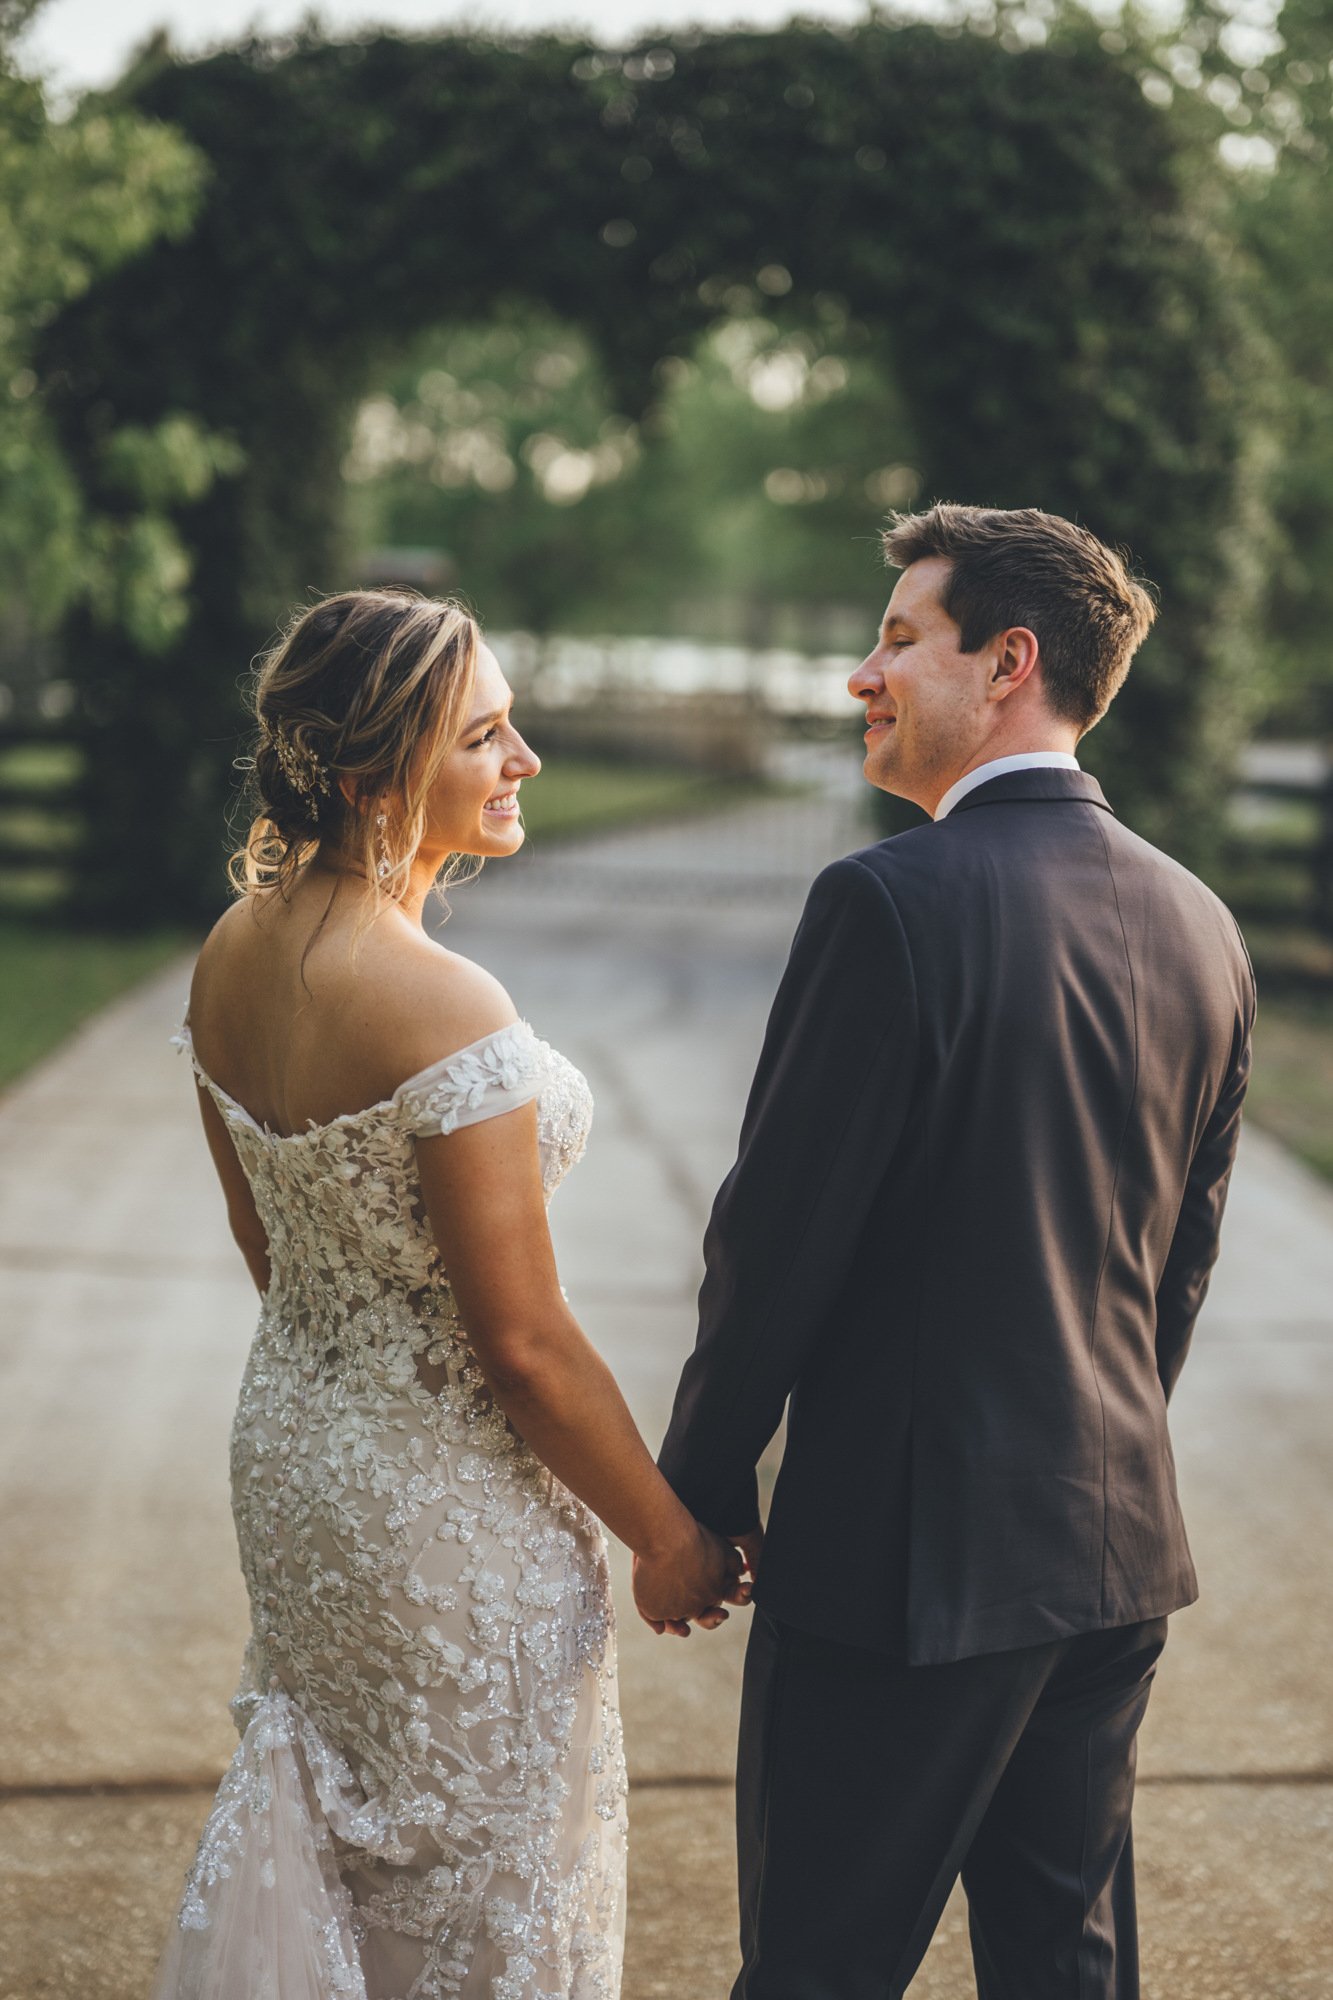 Bow Tie Photo & Video couple during bridal portraits at Club Lake Plantation near Orlando, FL-3.jpg